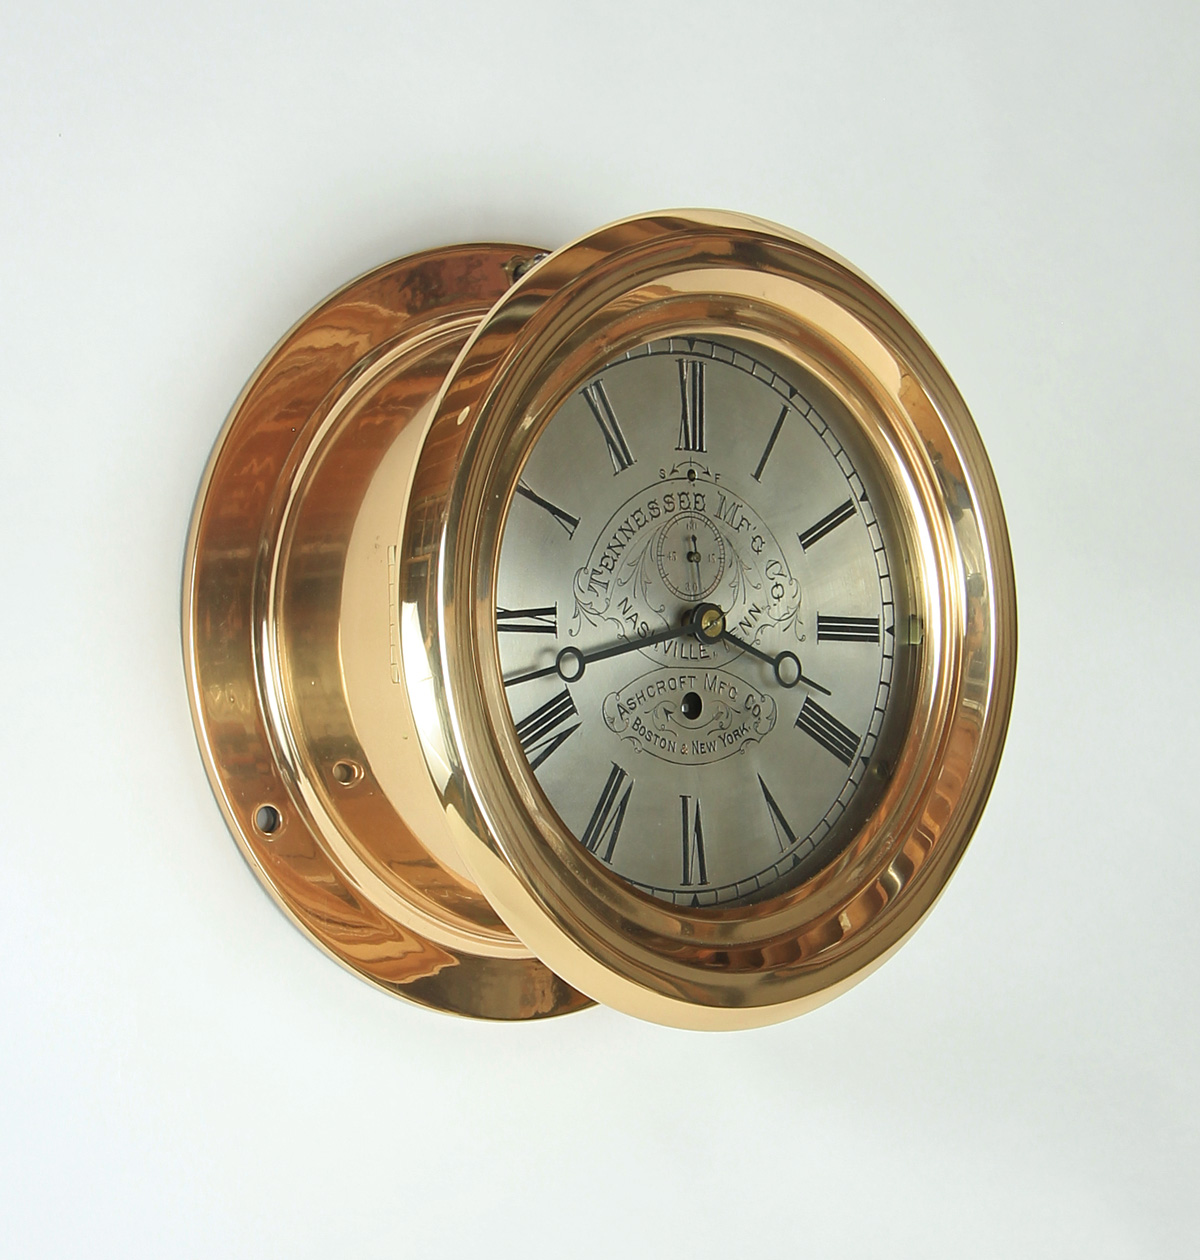 E. Howard 8 1/2" Marine Clock for Tennessee Mfg. Co.